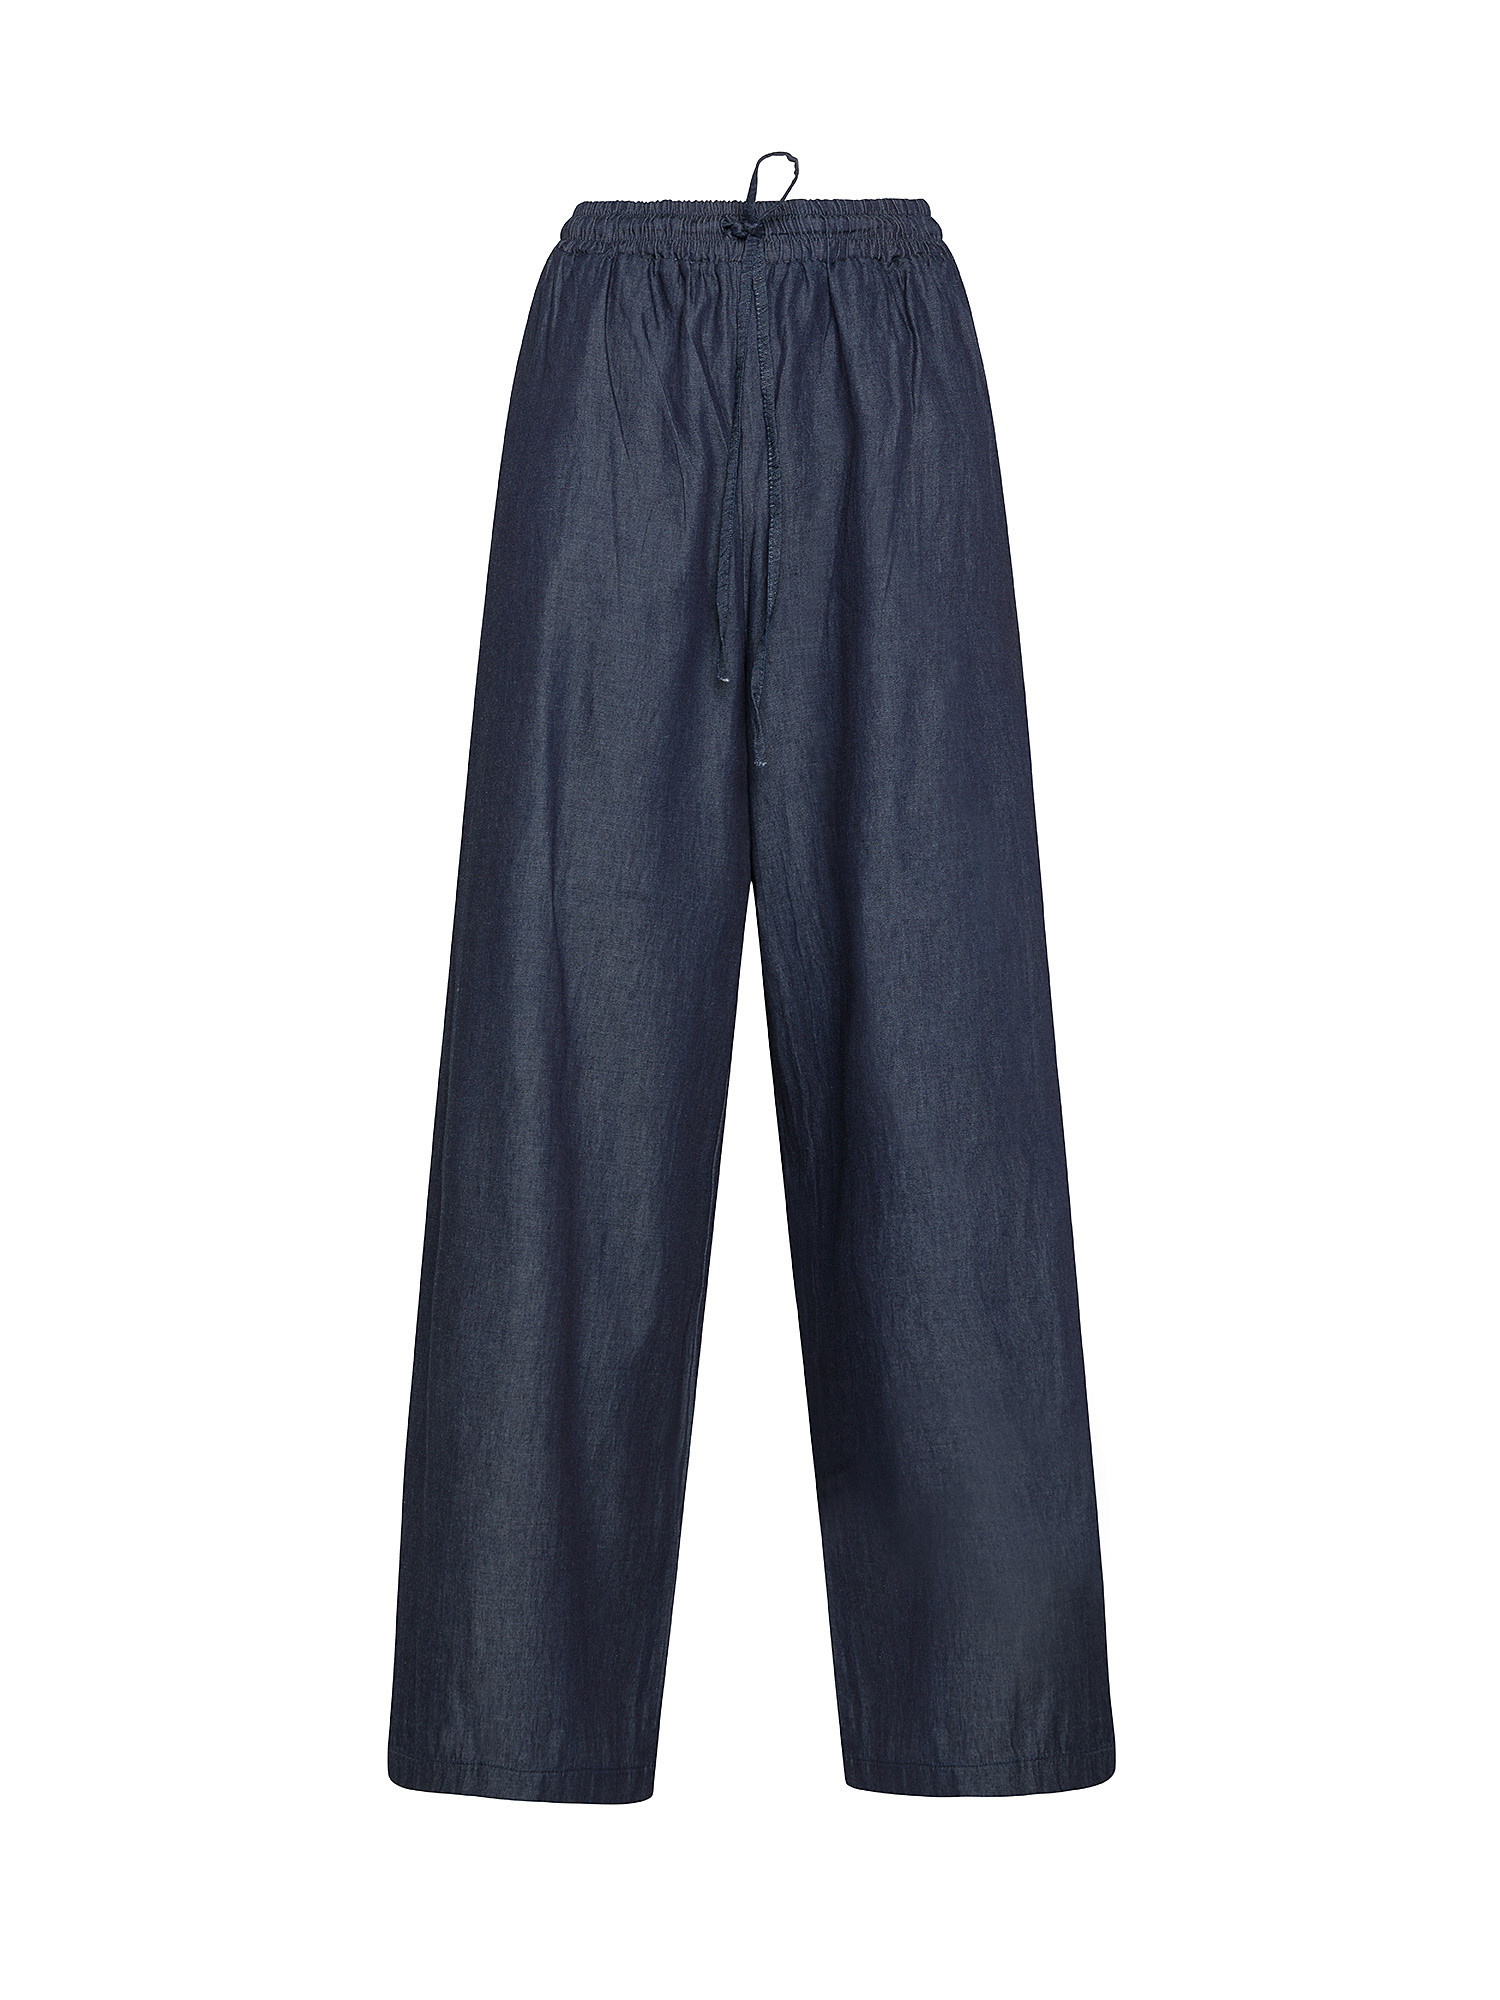 Pantalone chambray di cotone tinta unita, Azzurro, large image number 0